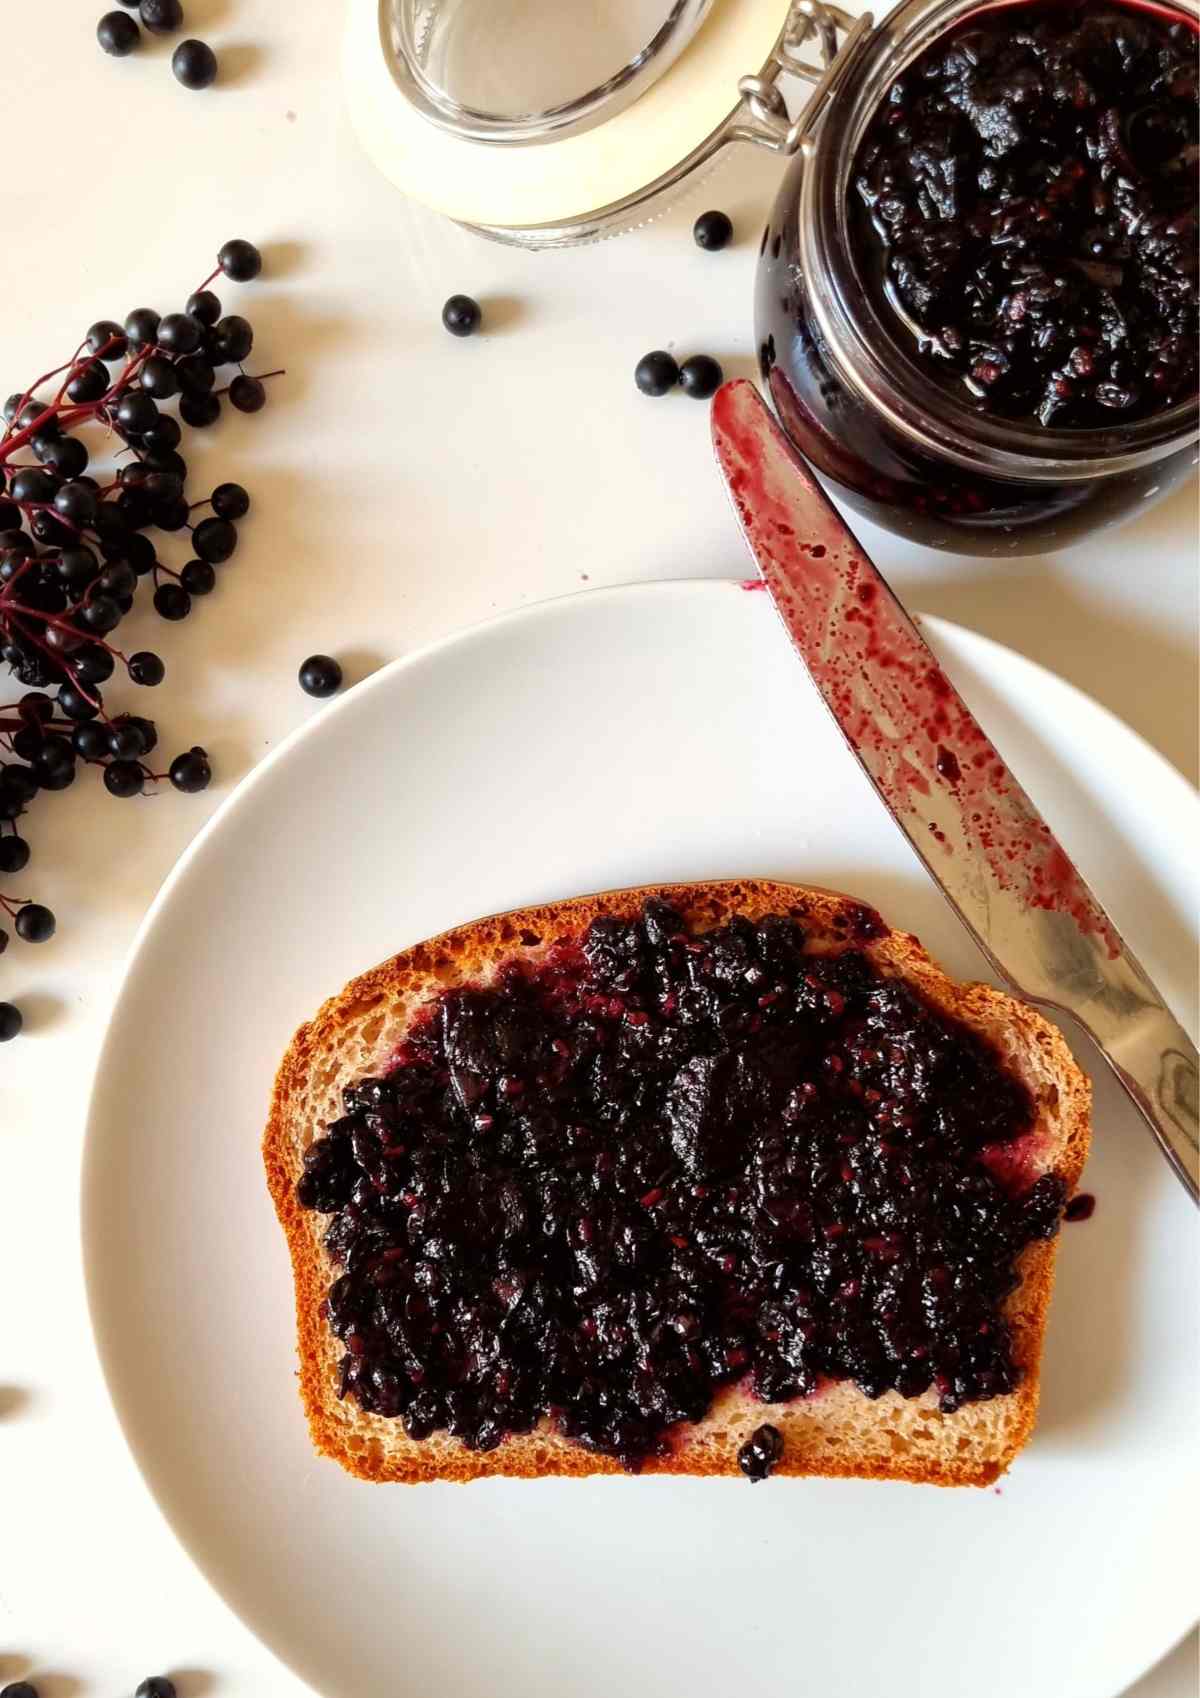 Elderberry Jam spread onto a piece of bread on a plate